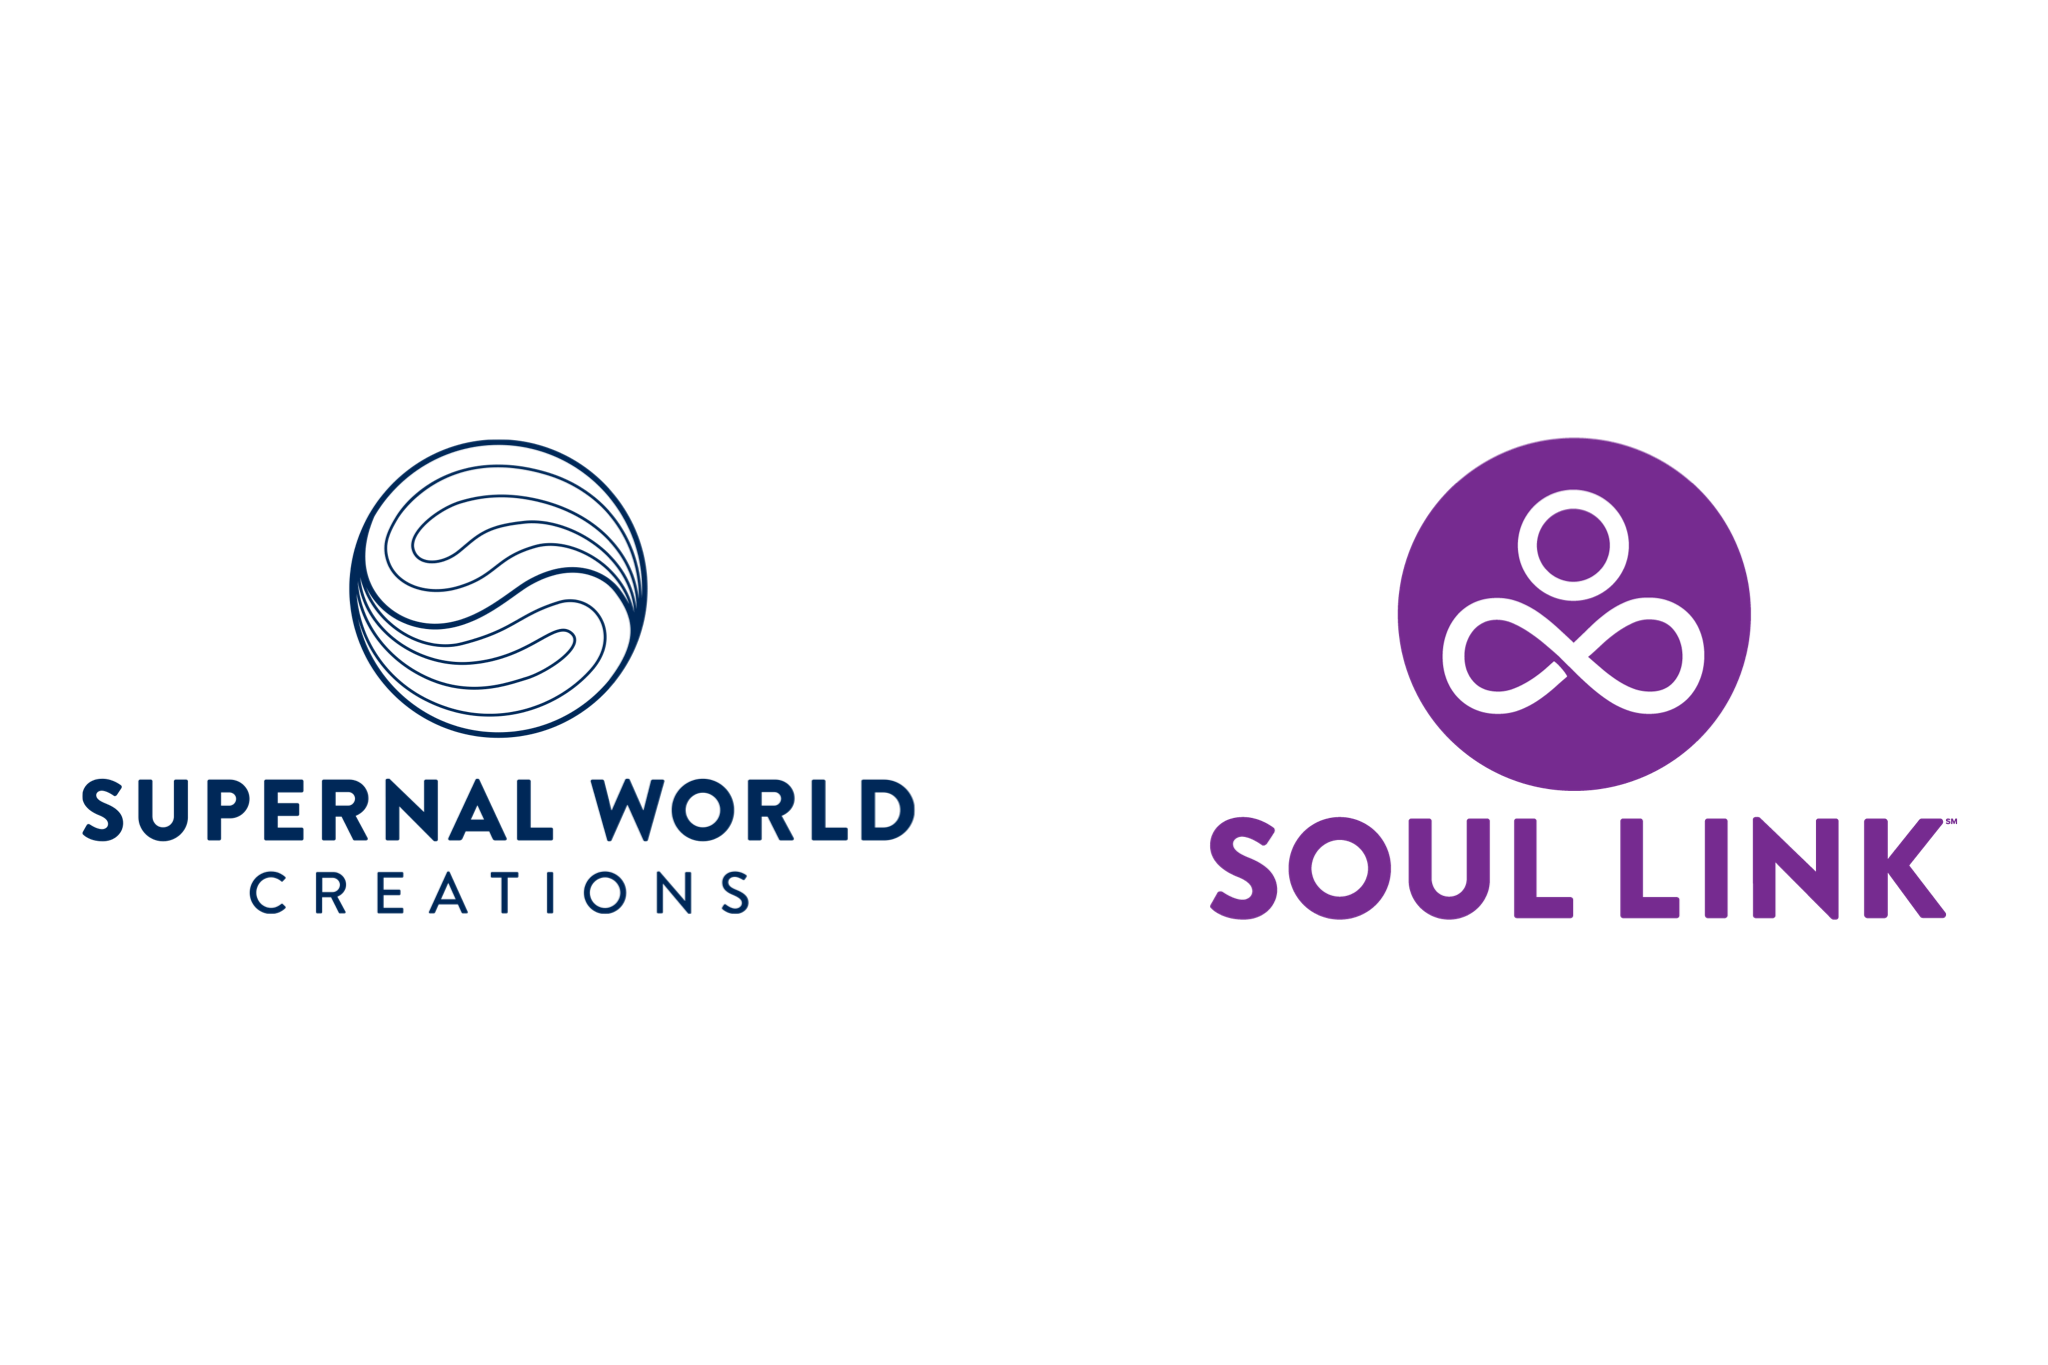 Supernal World Creations and Soul Link Shop